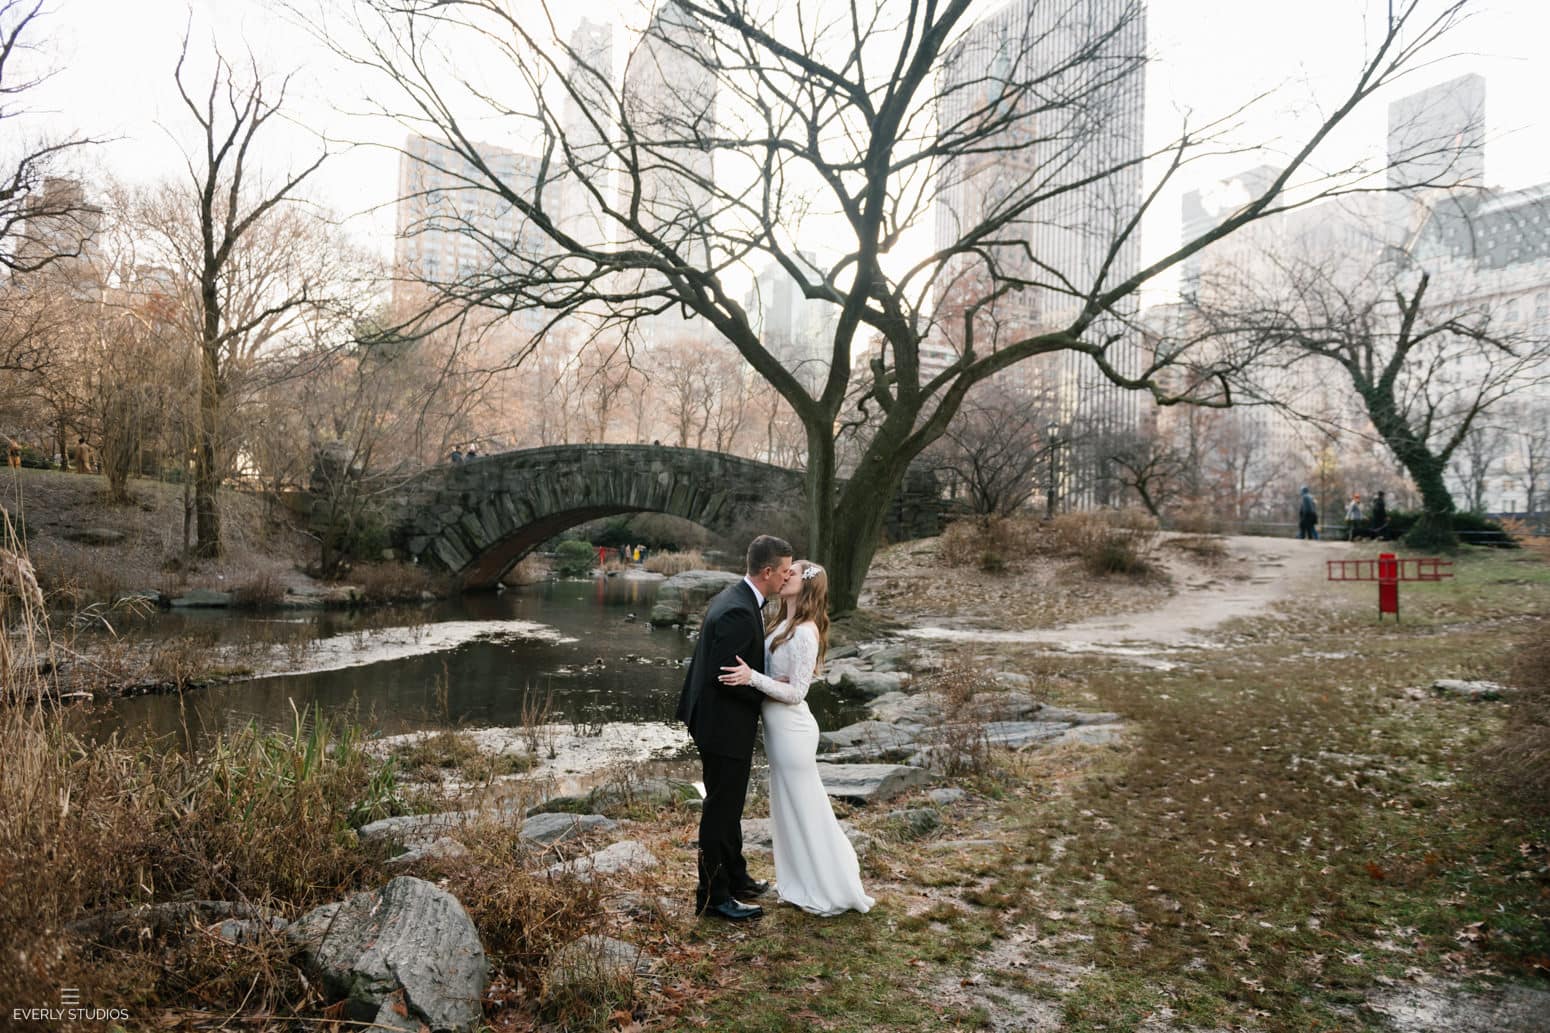 Gapstow Bridge elopement in Central Park NYC. Winter Central Park wedding at Gapstow Bridge in New York. Photo by Central Park wedding photographer Everly Studios, www.everlystudios.com